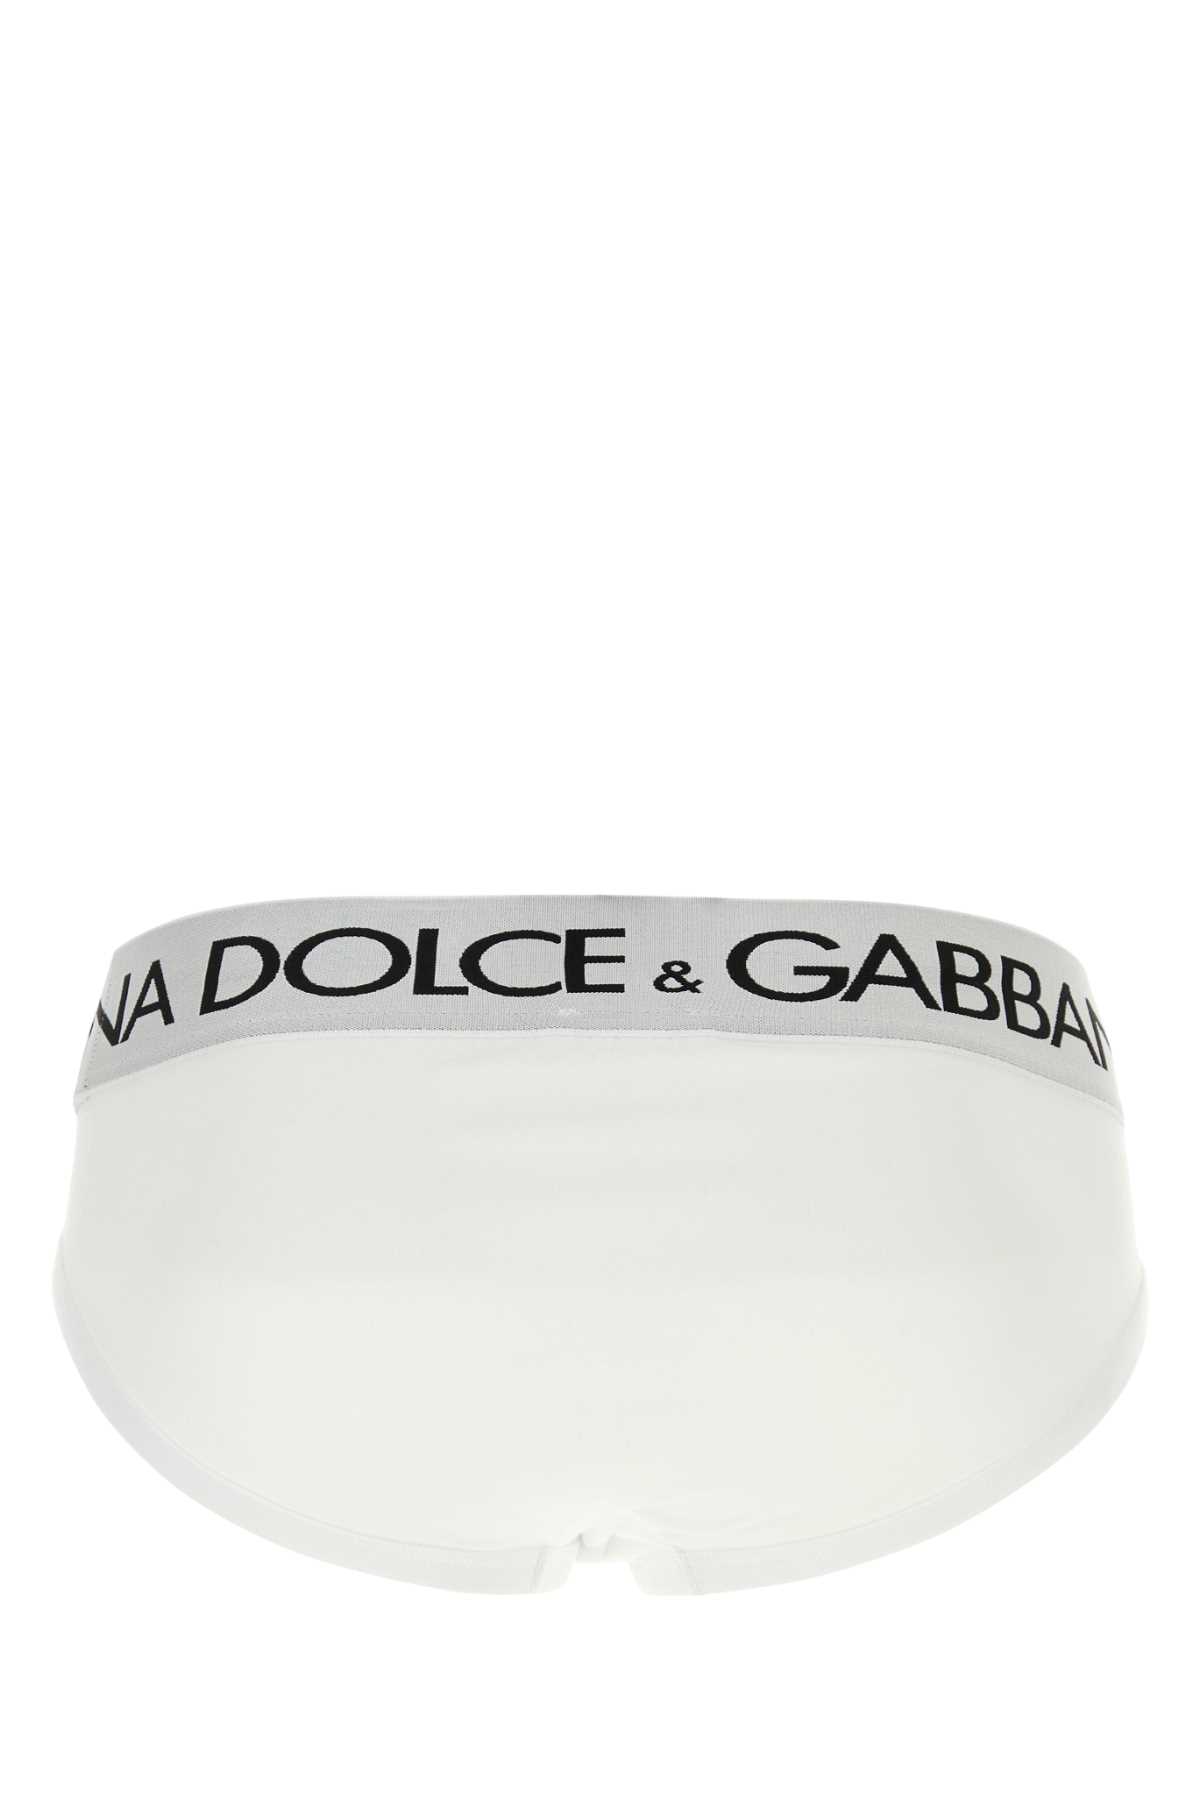 Dolce & Gabbana White Stretch Cotton Brief In Biancoottico